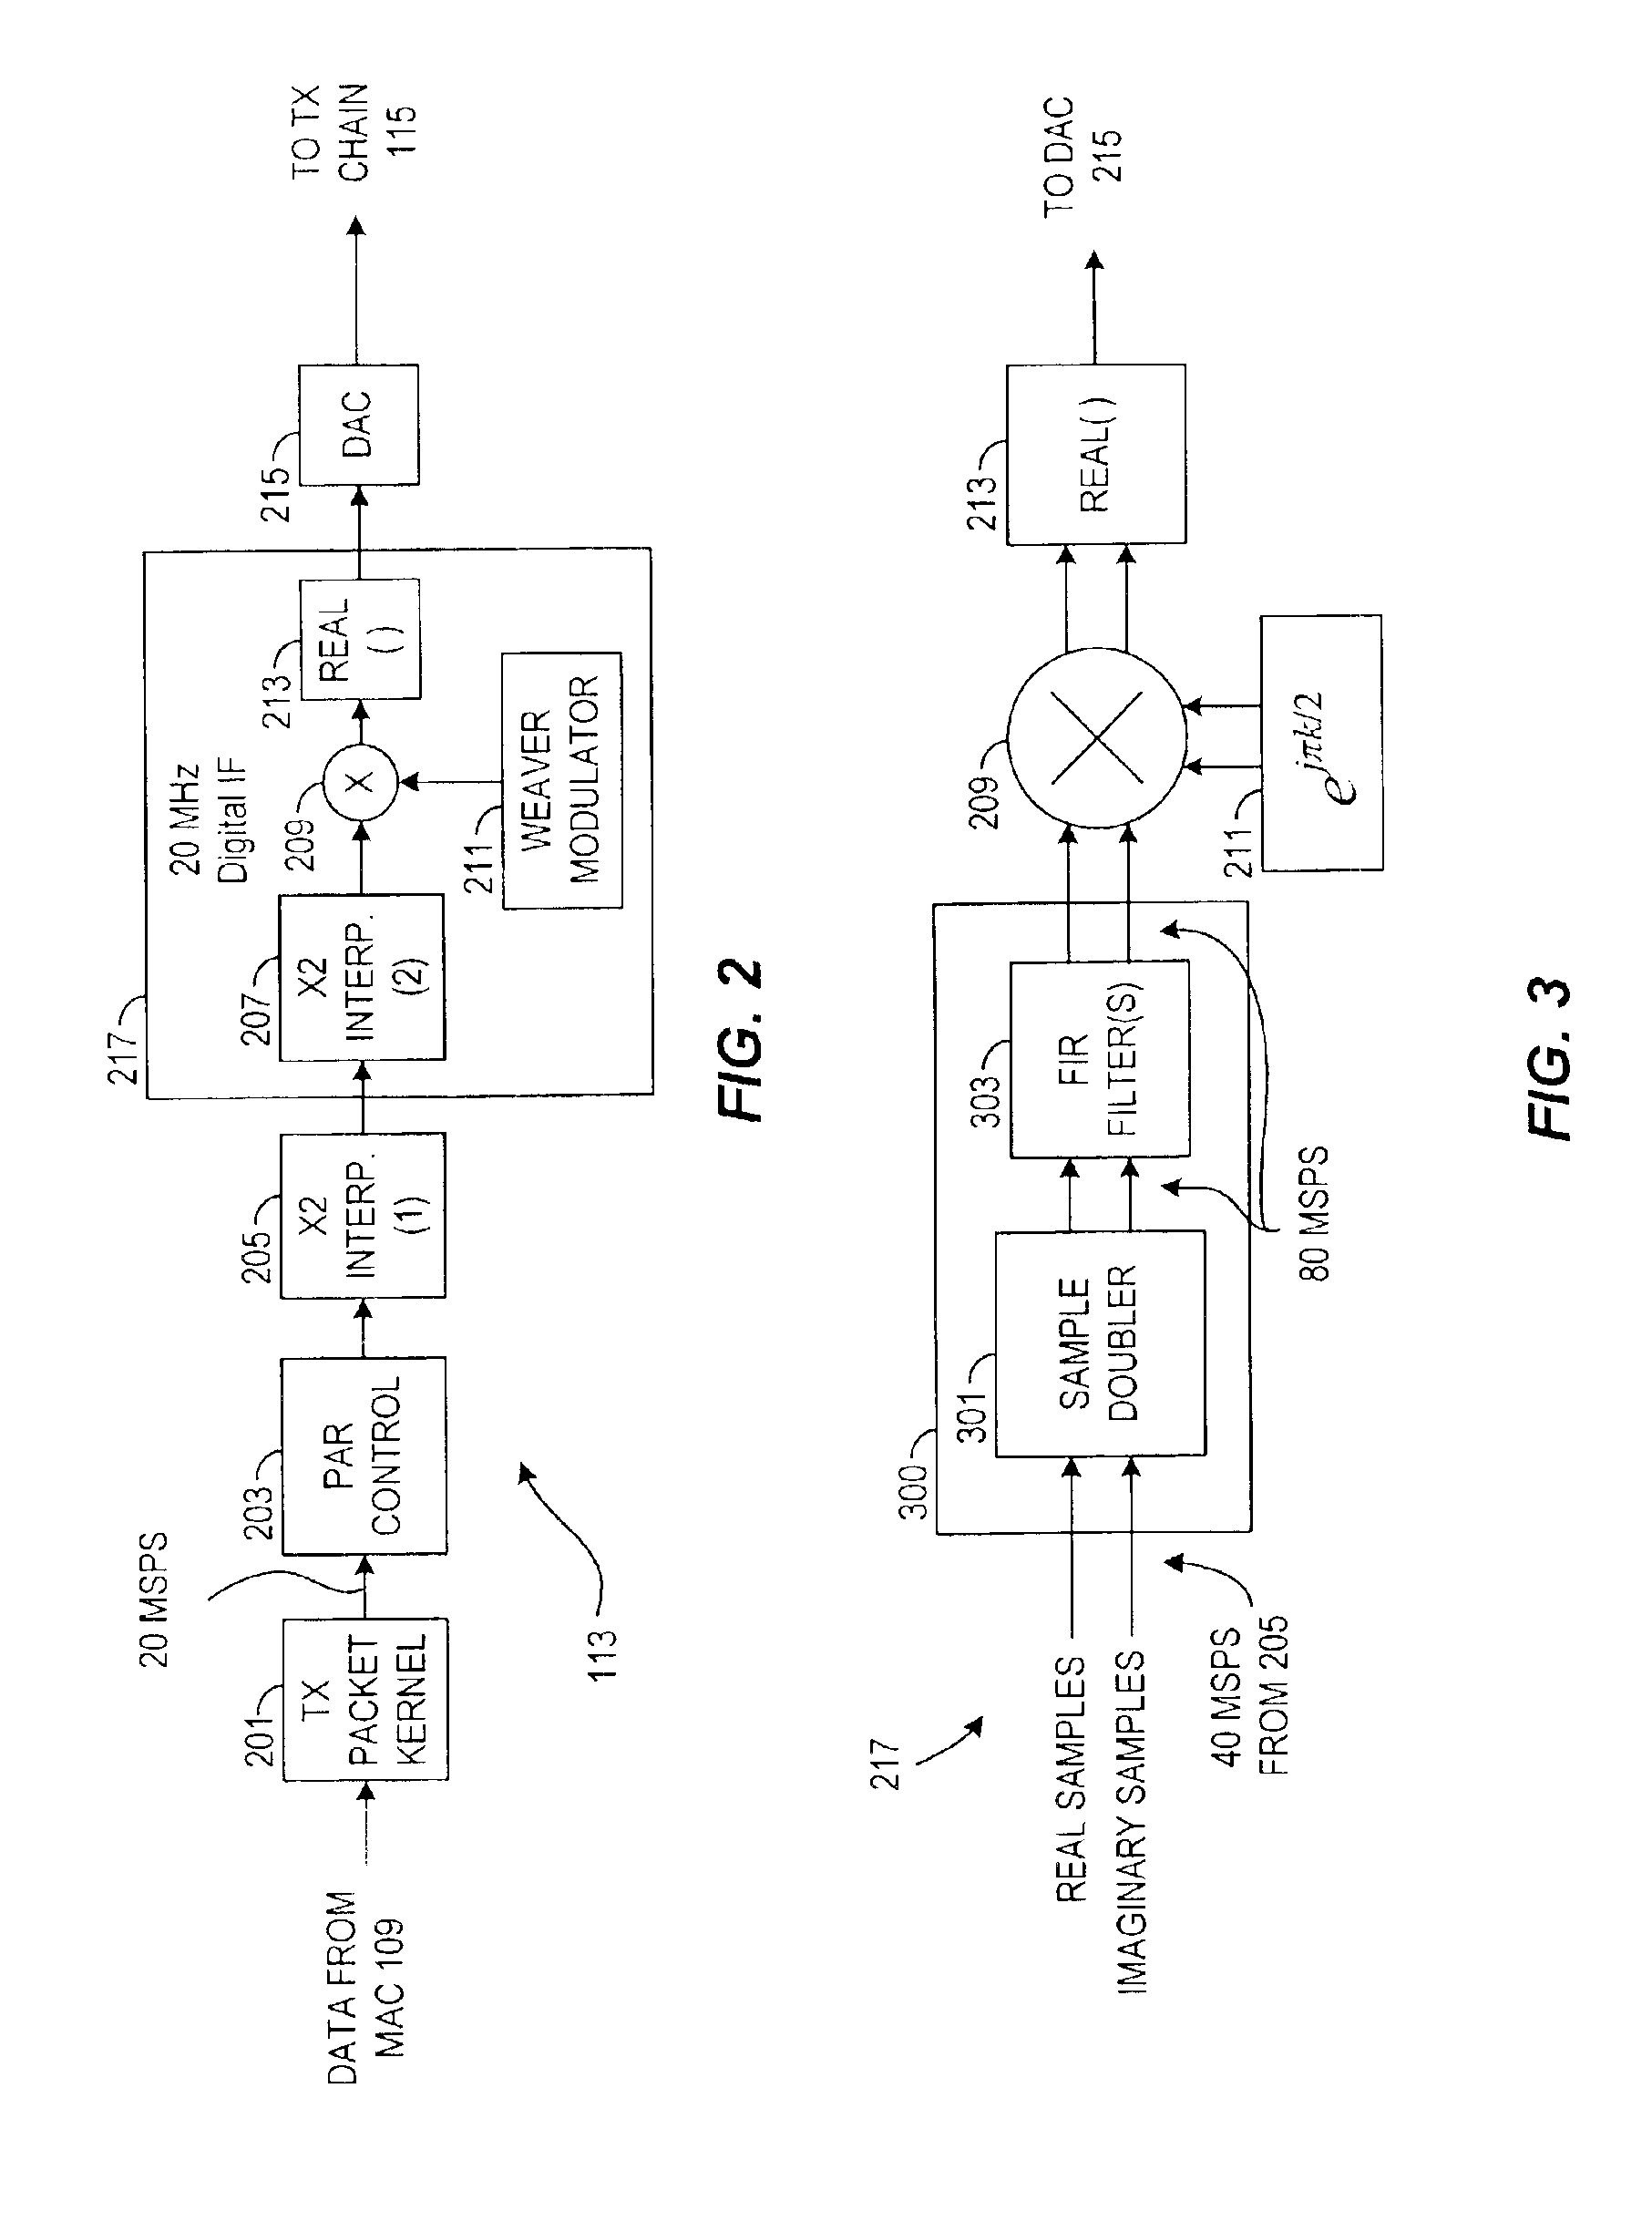 Integrated modulator and demodulator configuration